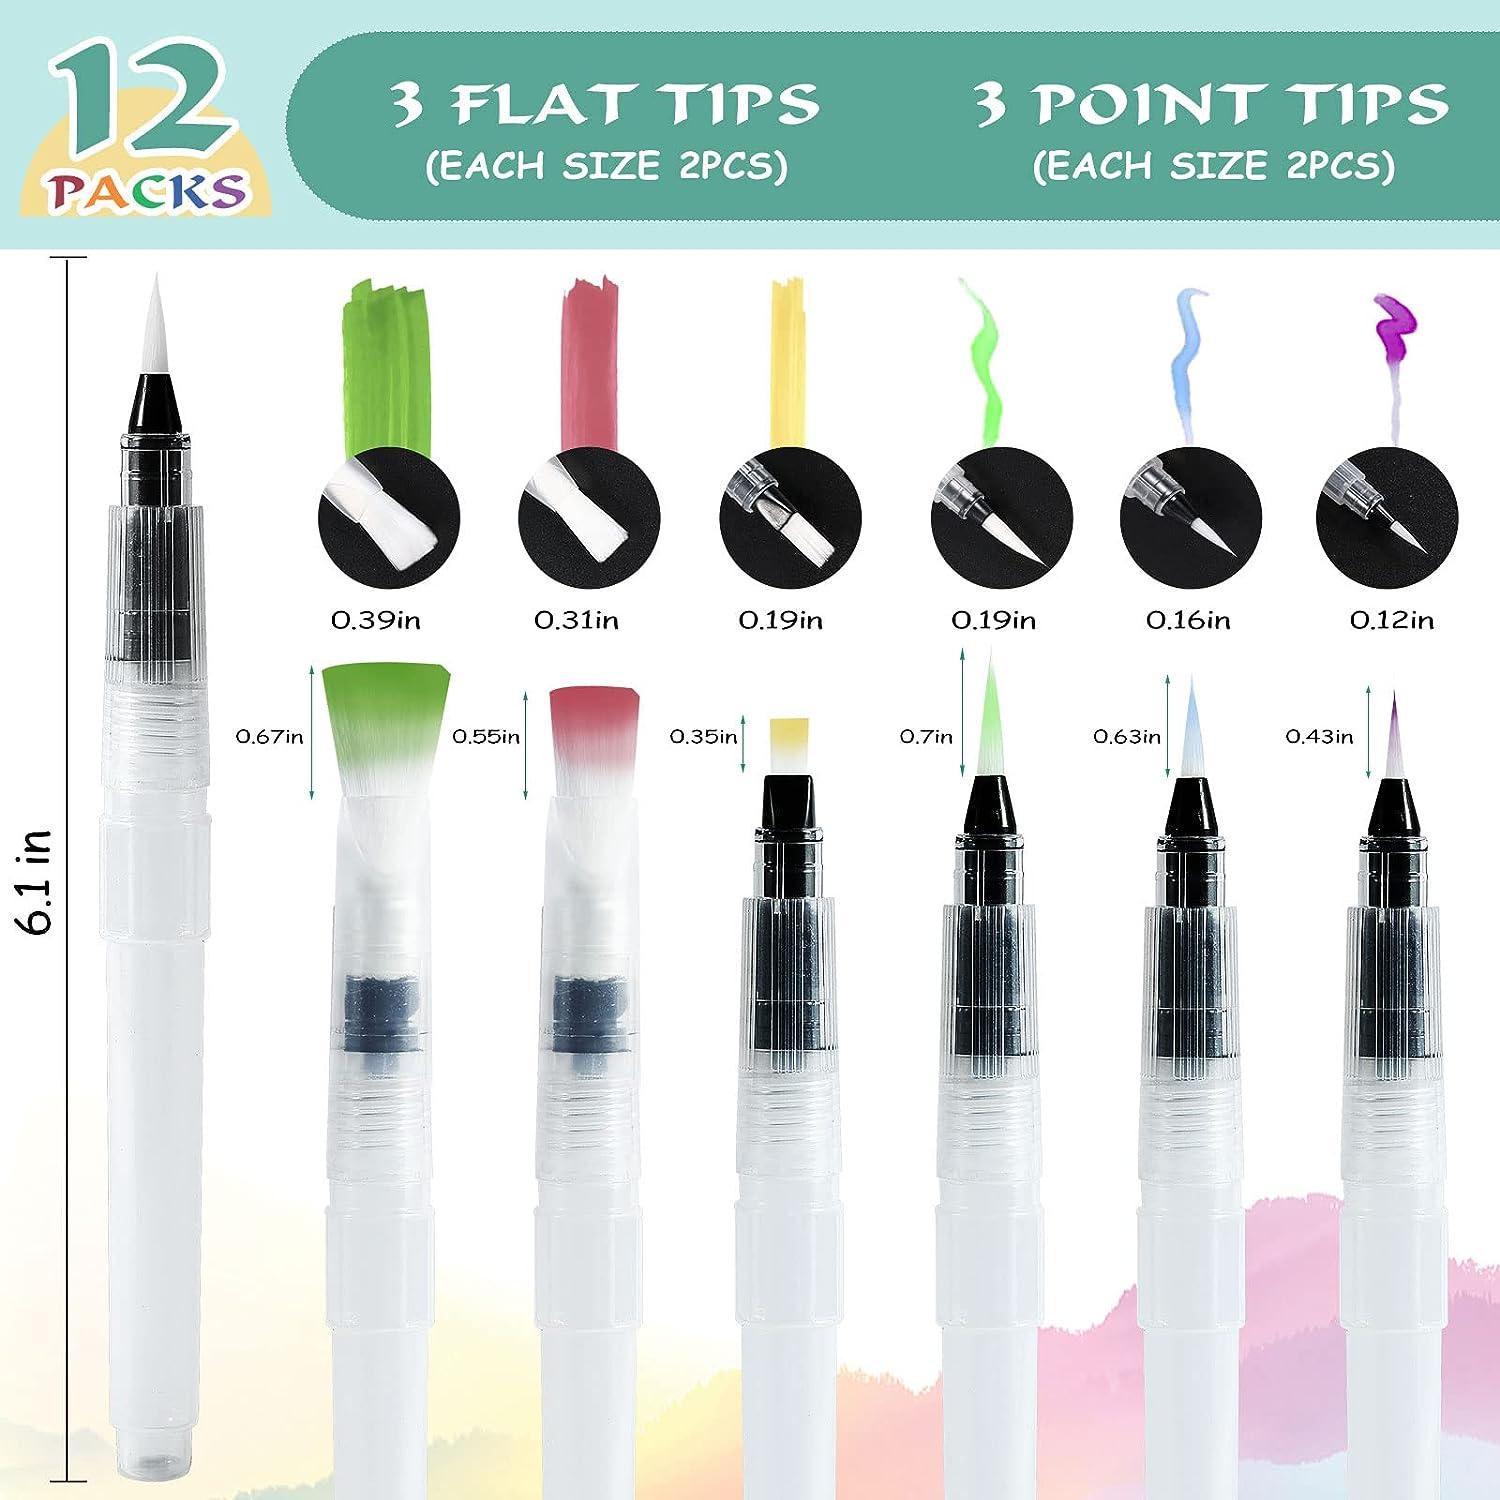 Water Color Brush Pen Set 12 Pcs Water Paint Brushes Refillable Watercolor  Brush Pens For Student